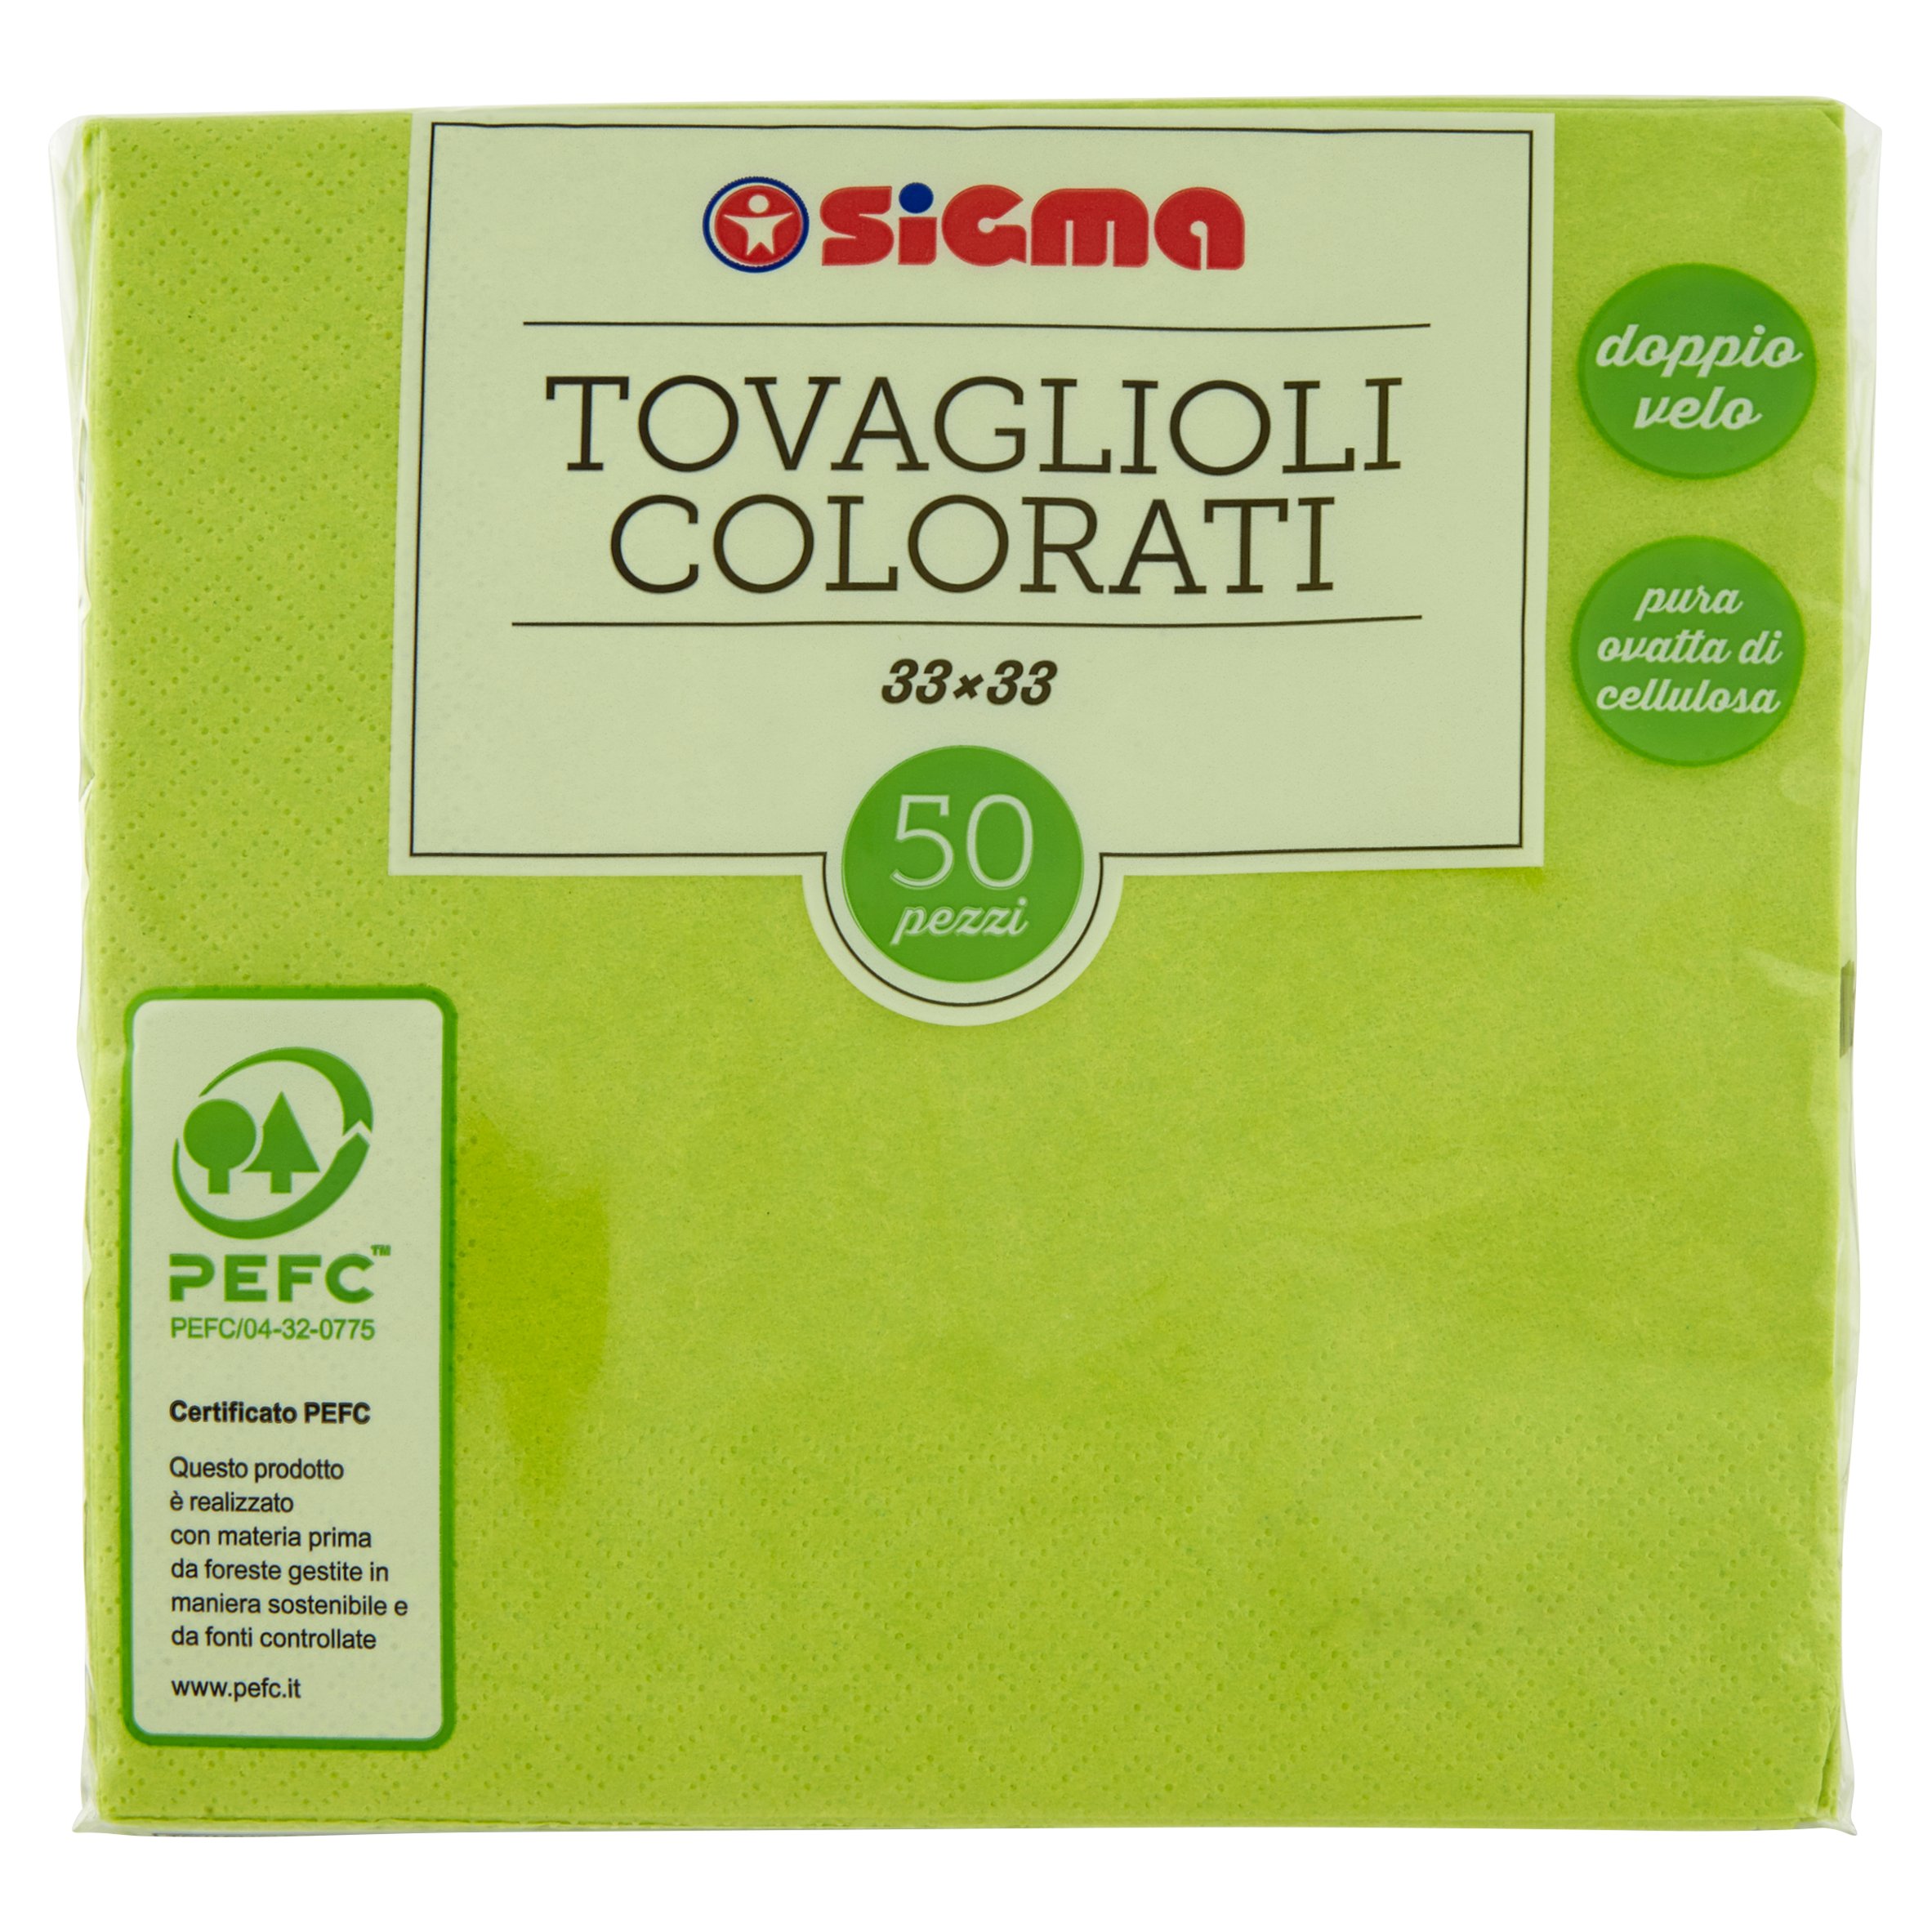 Sigma Tovaglioli Colorati 33x33 verdi 50 pz - SuperSIGMA